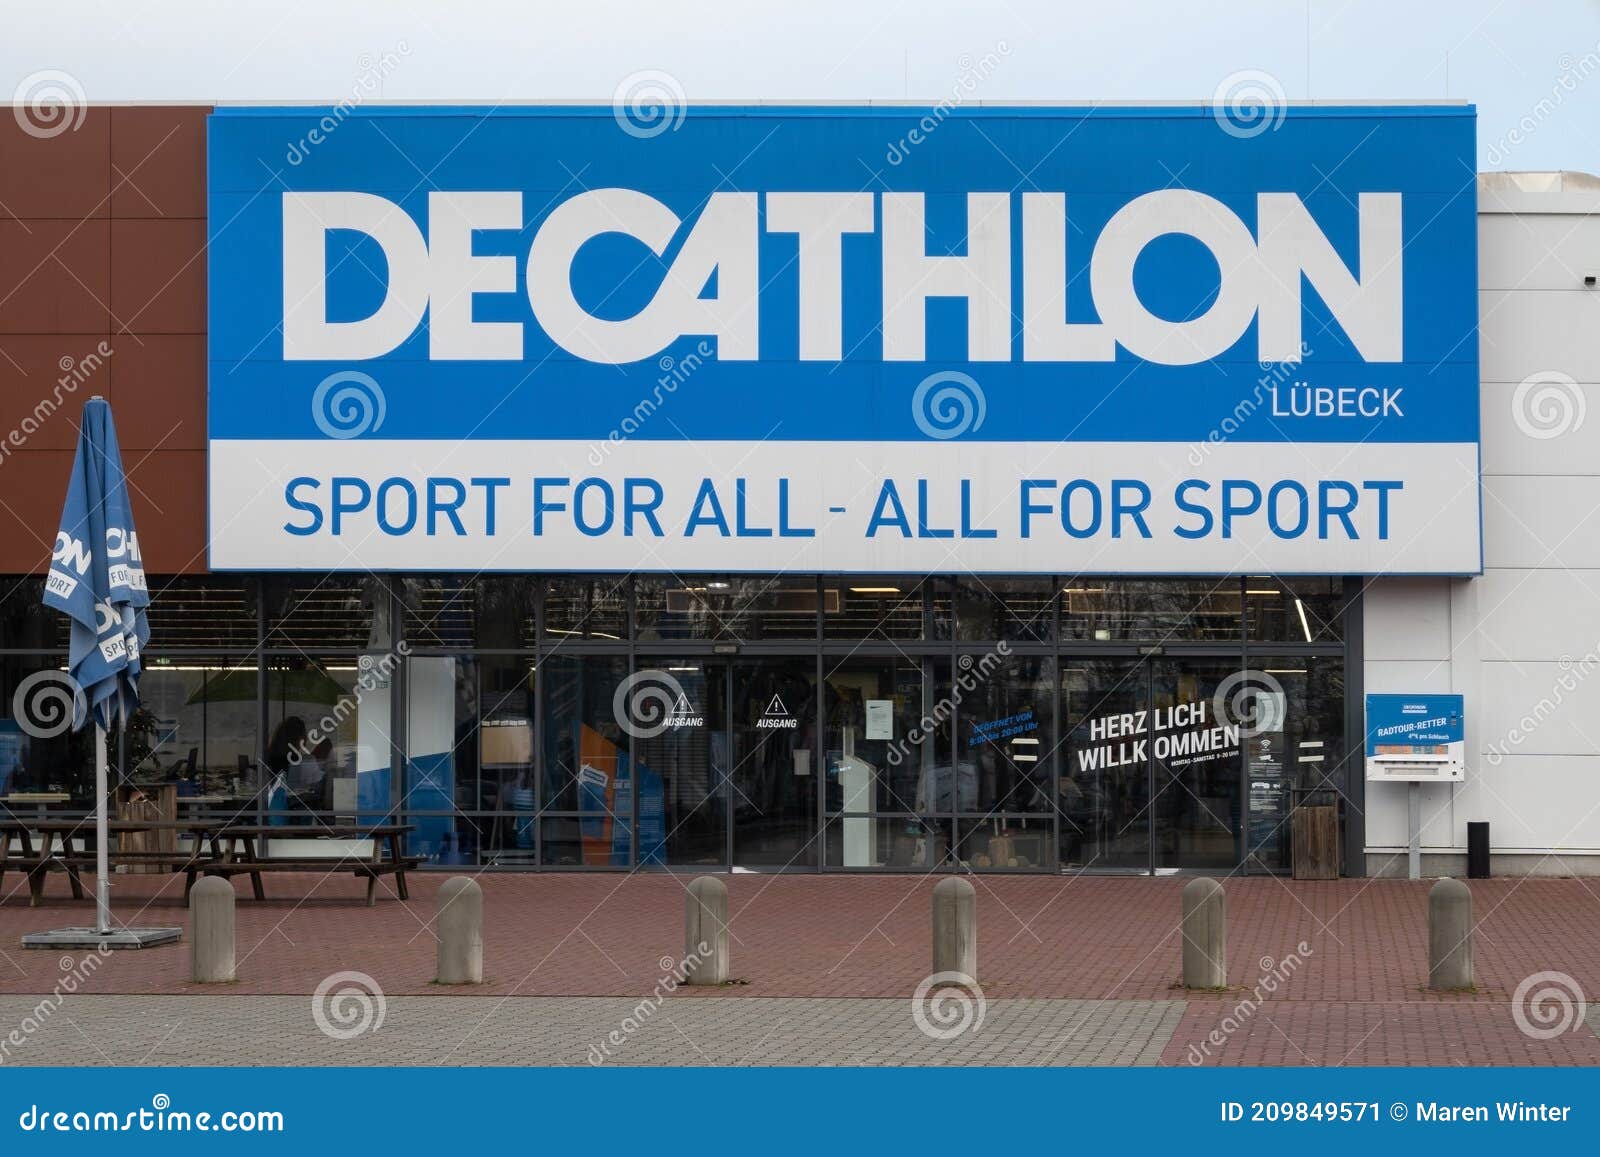 Decathlon Sports India, Srinagar